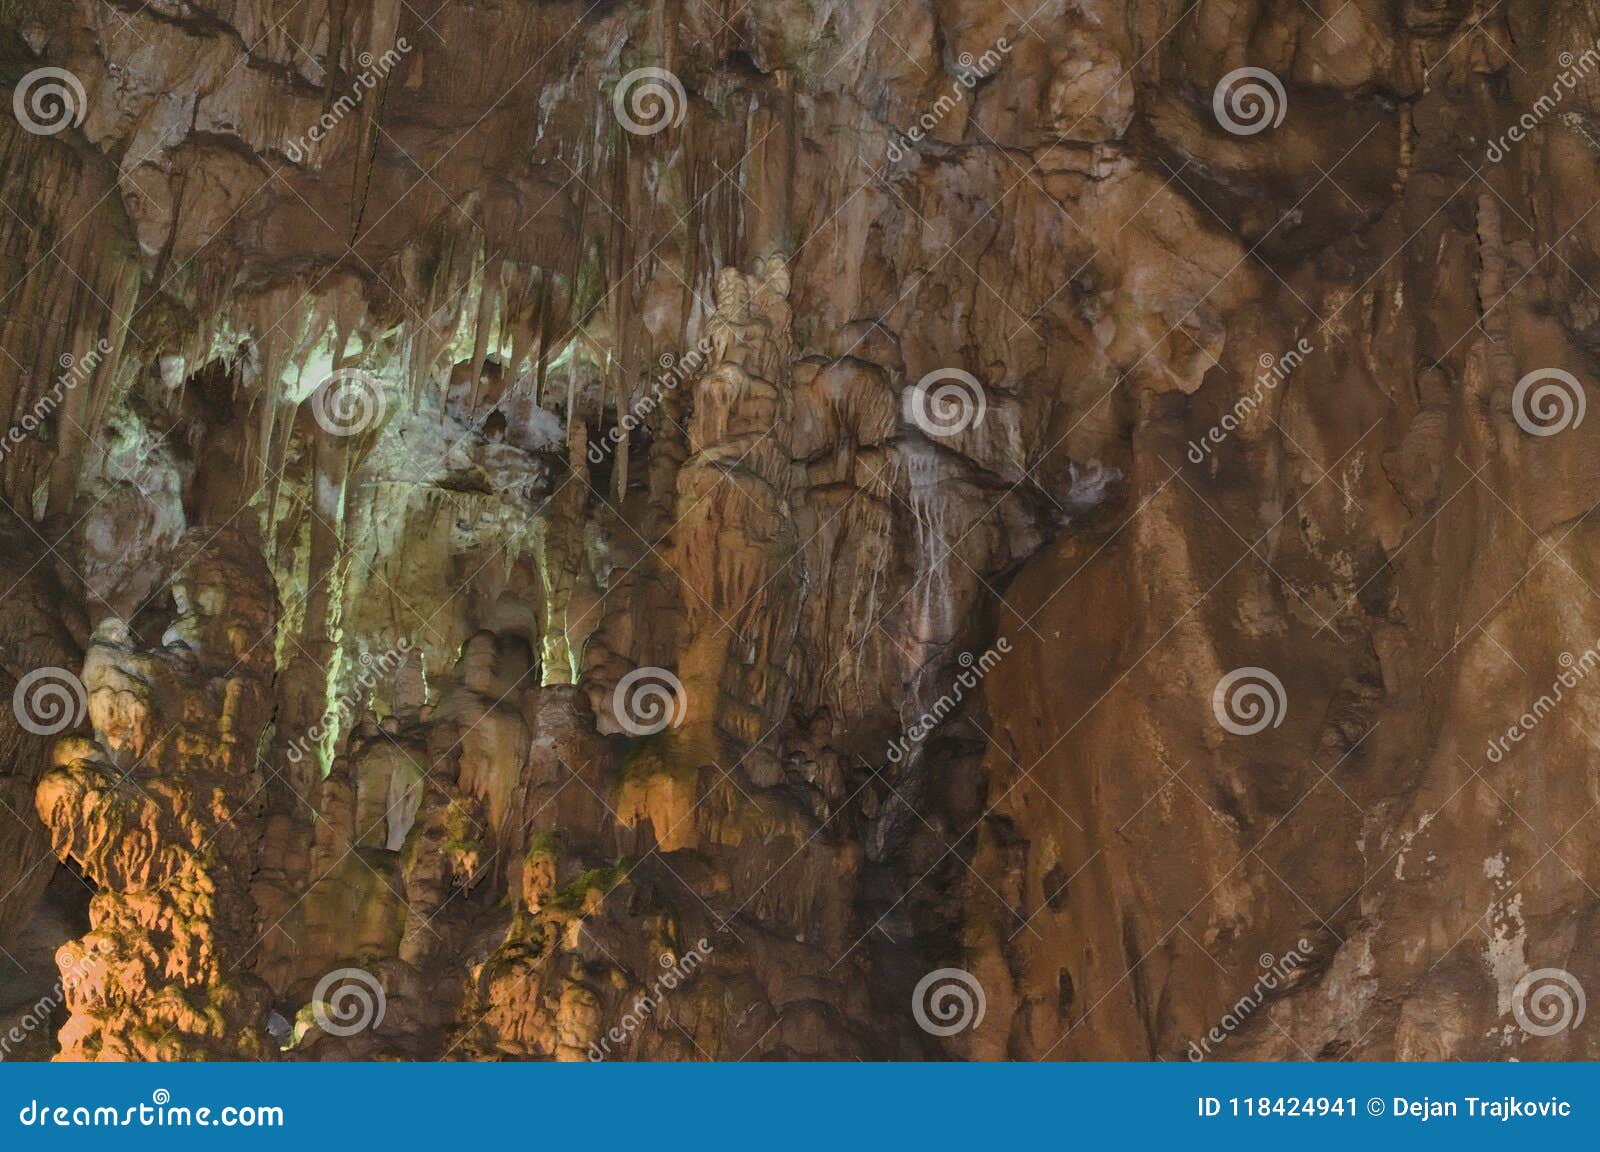 stalagmites and stalactites in resava cave, serbia